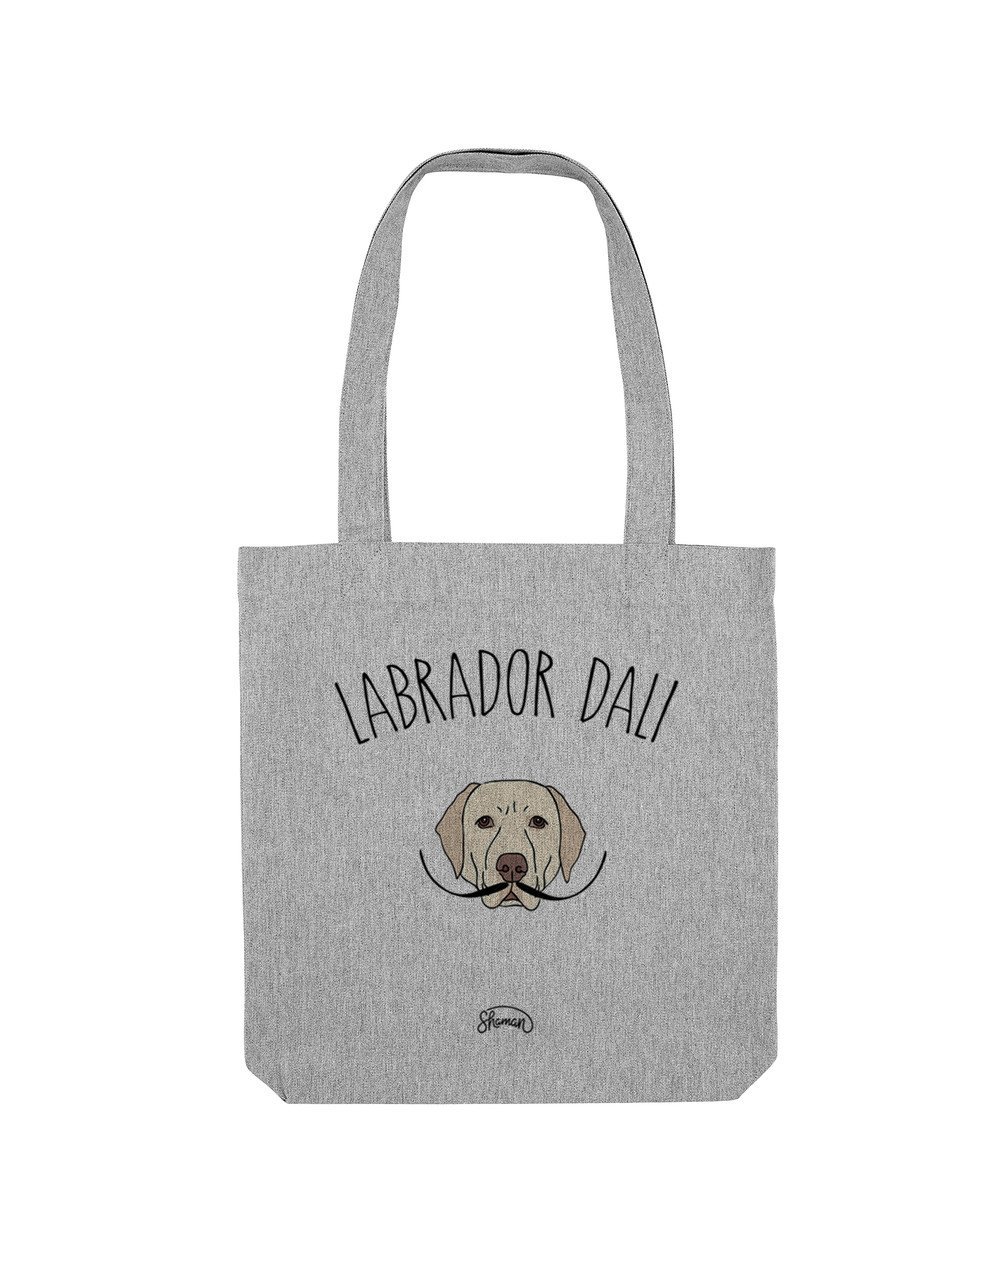 Tote Bag "Labrador Dali"